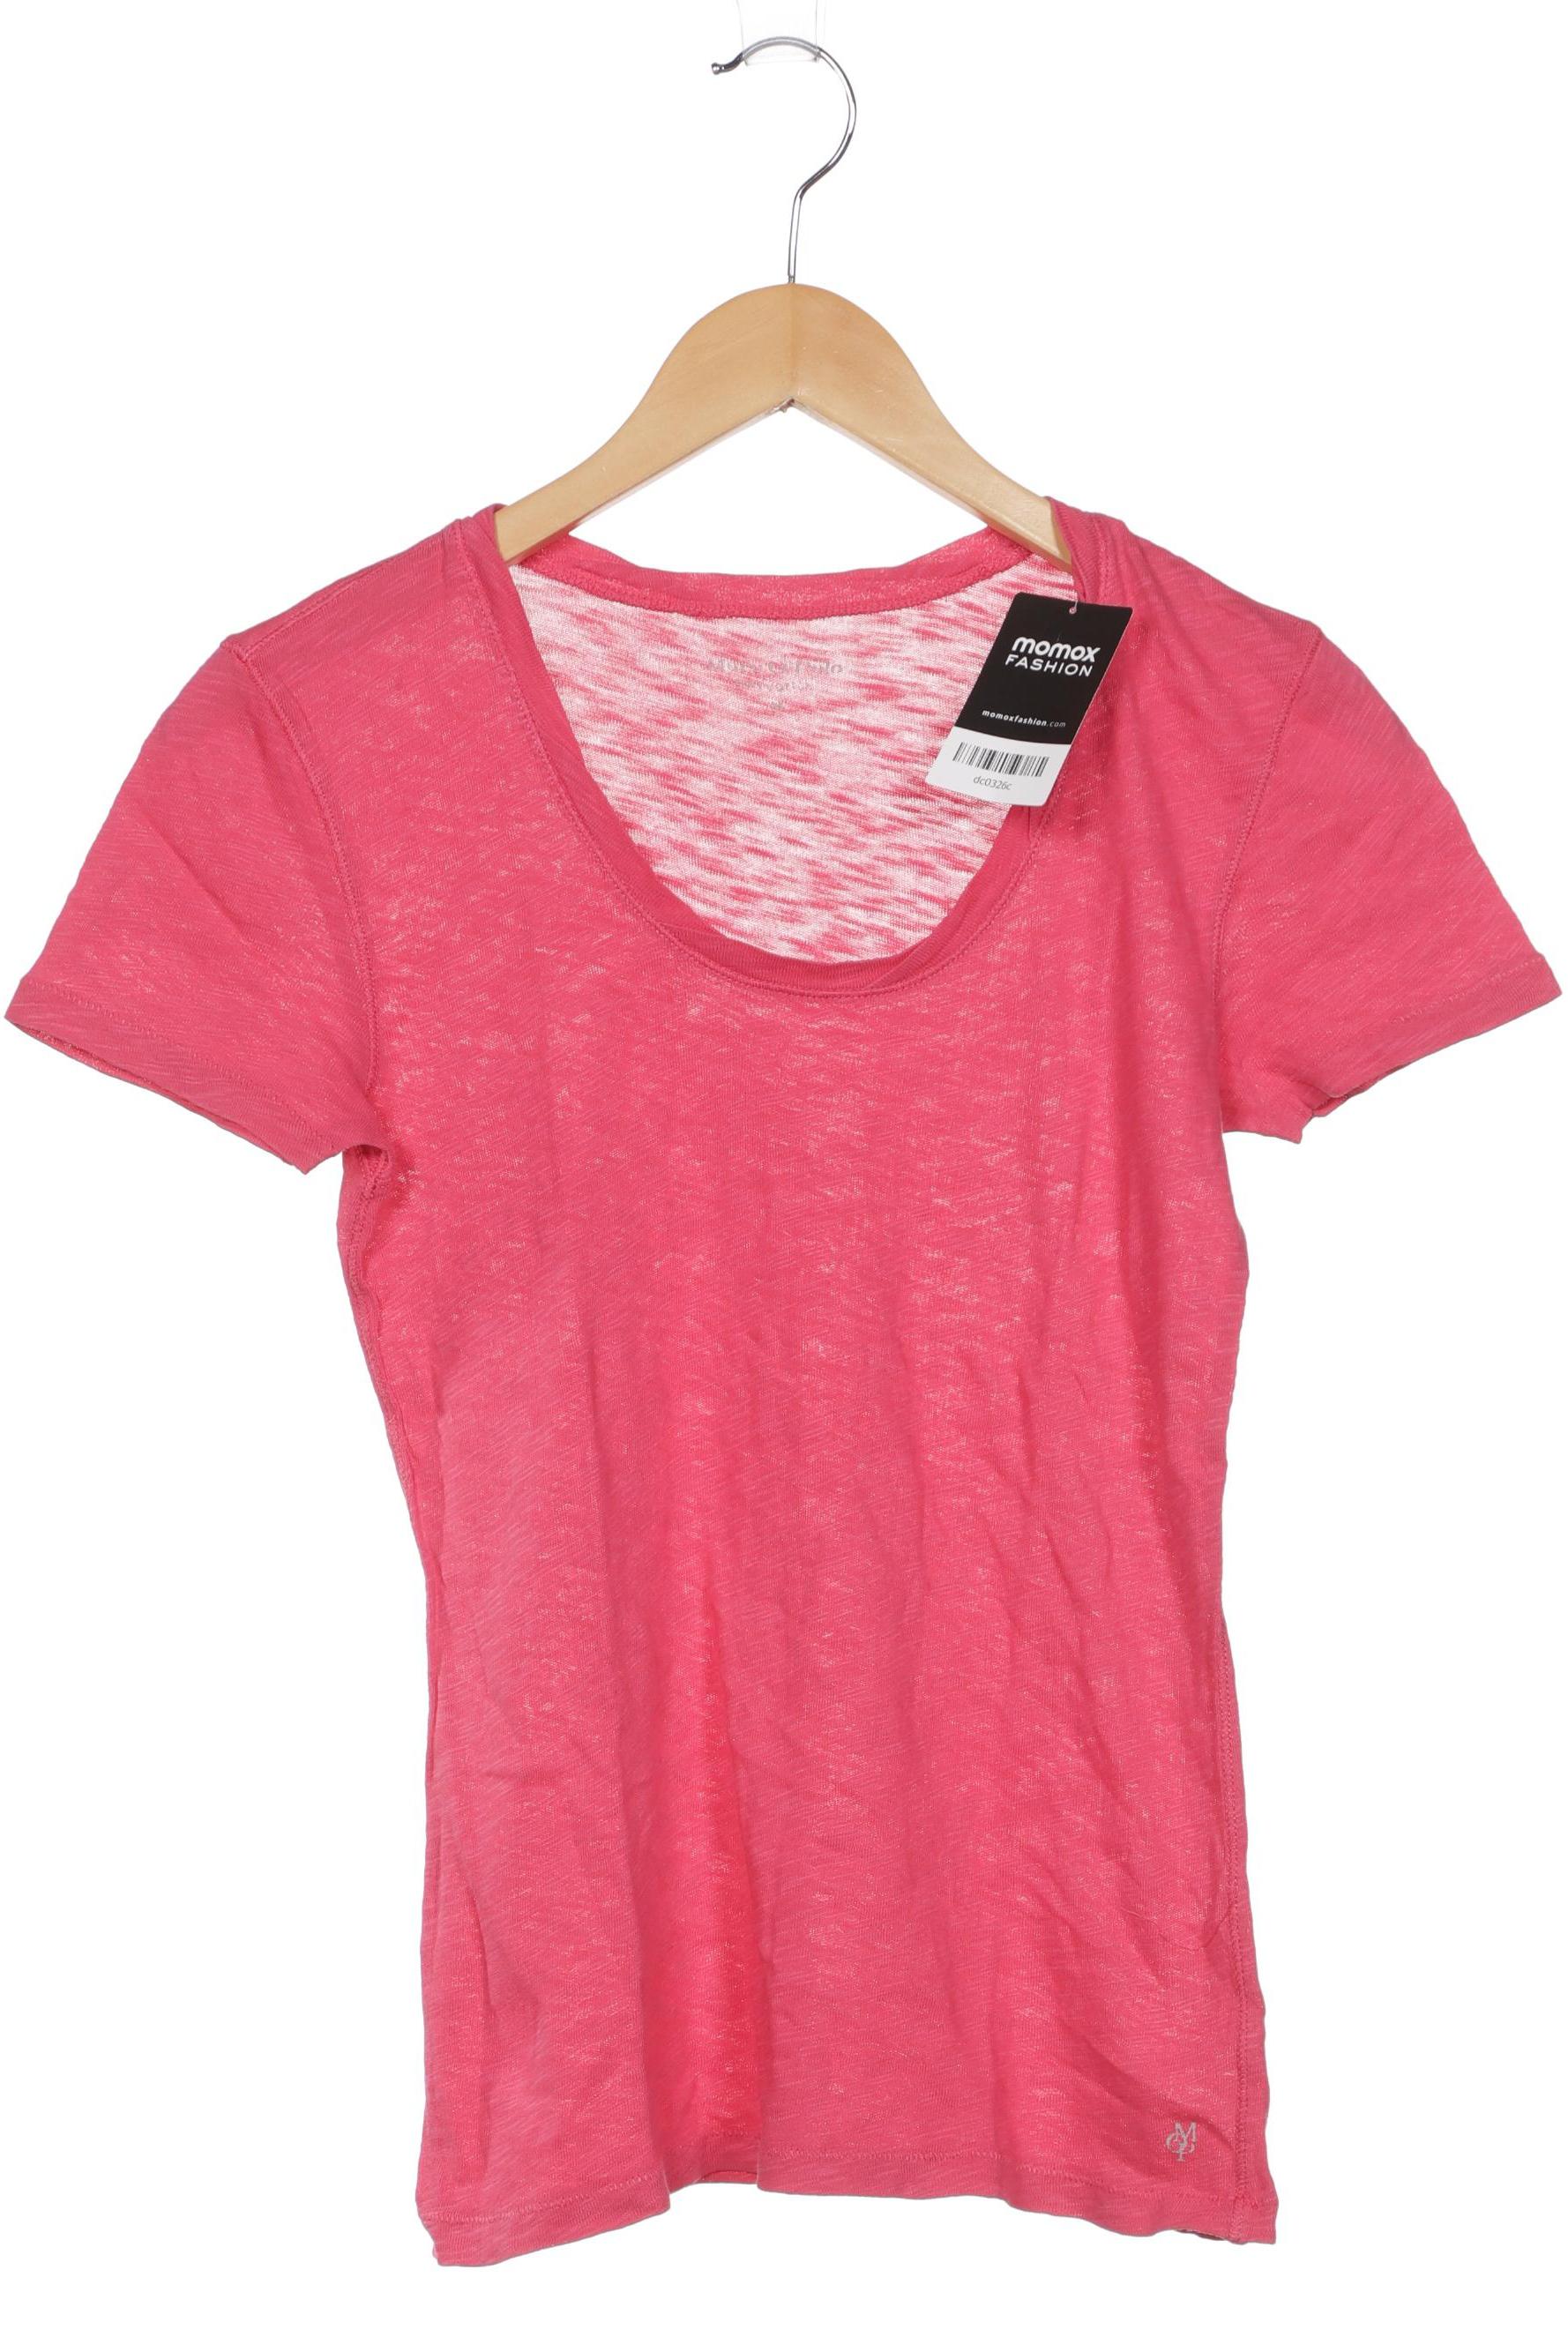 Image of Marc O Polo Damen T-Shirt pink INT M Baumwolle kein Etikett